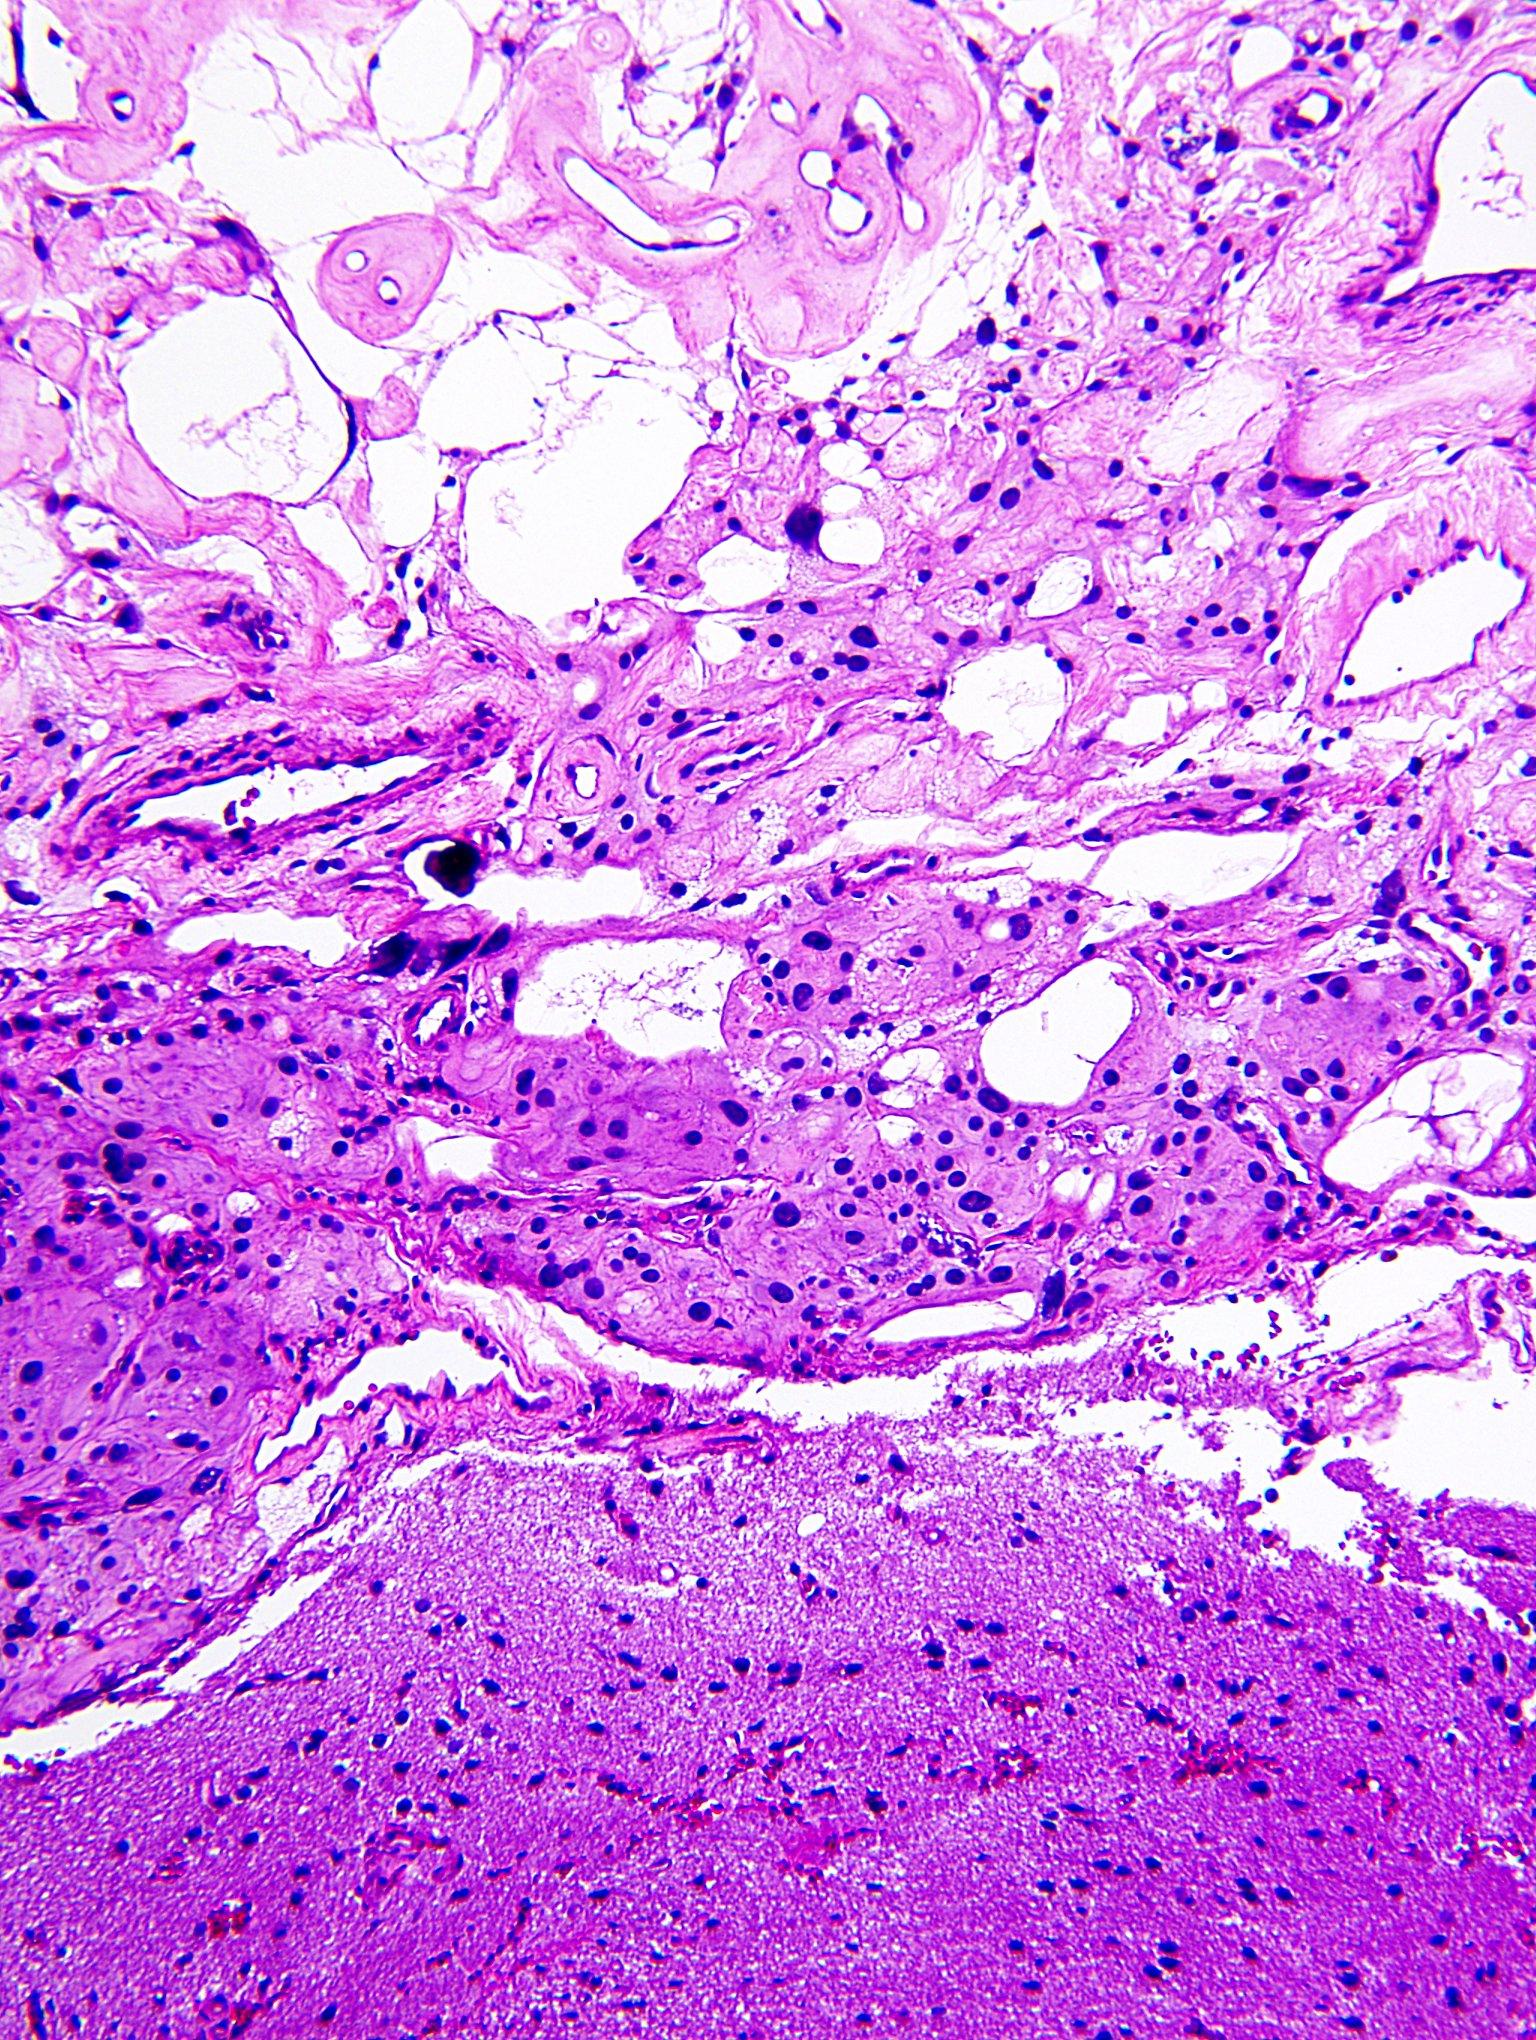 Microcystic meningioma with adherent brain parenchymal tissue